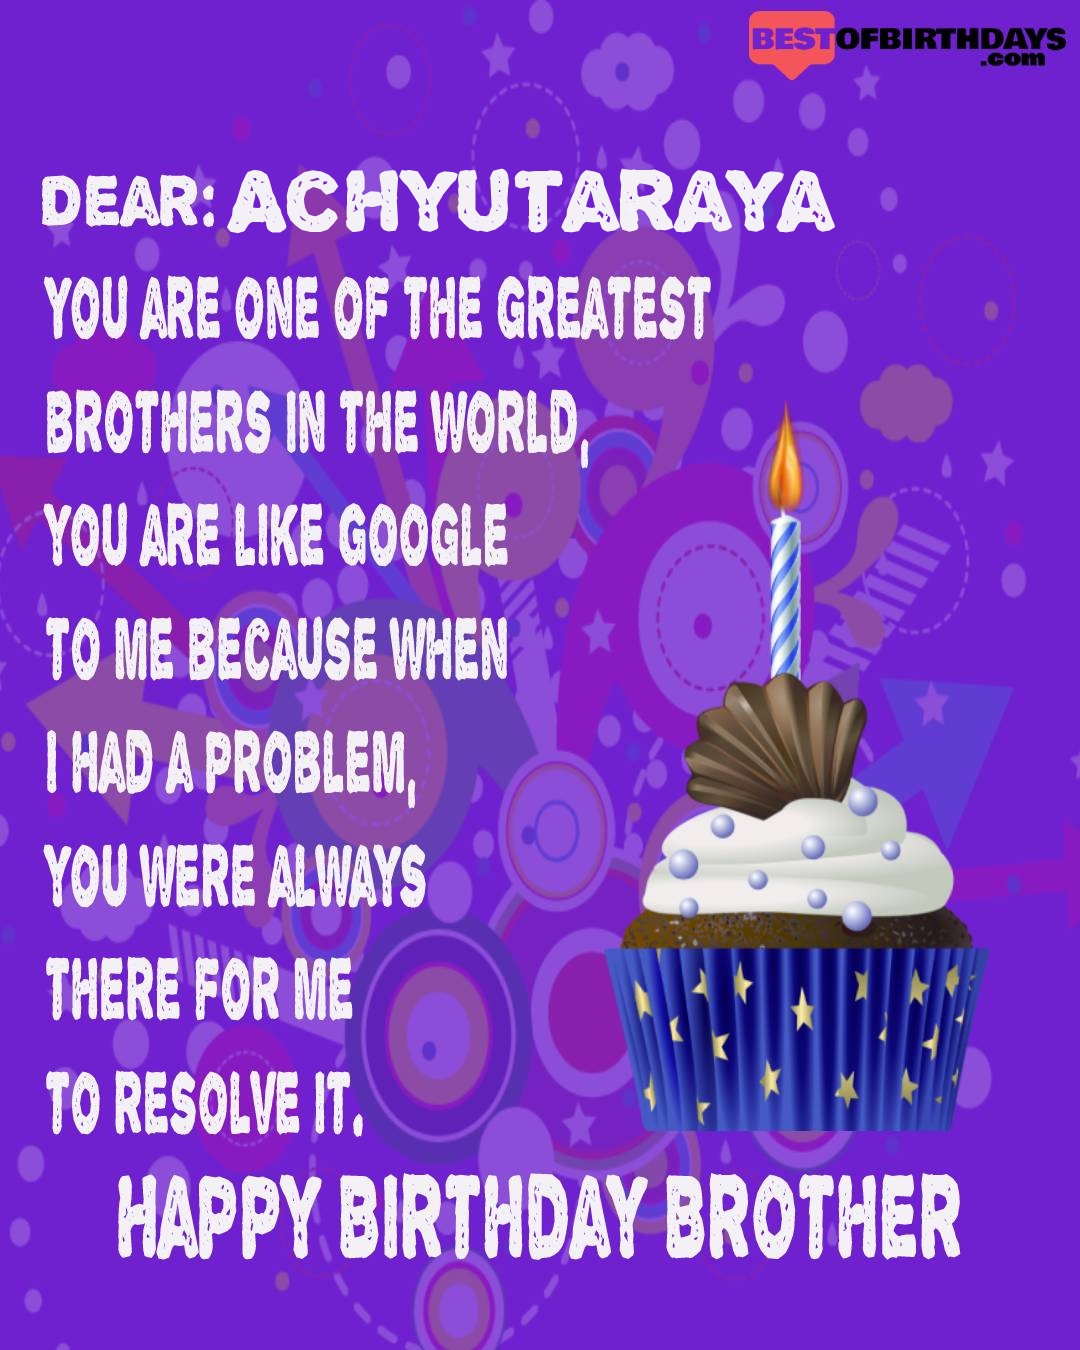 Happy birthday achyutaraya bhai brother bro